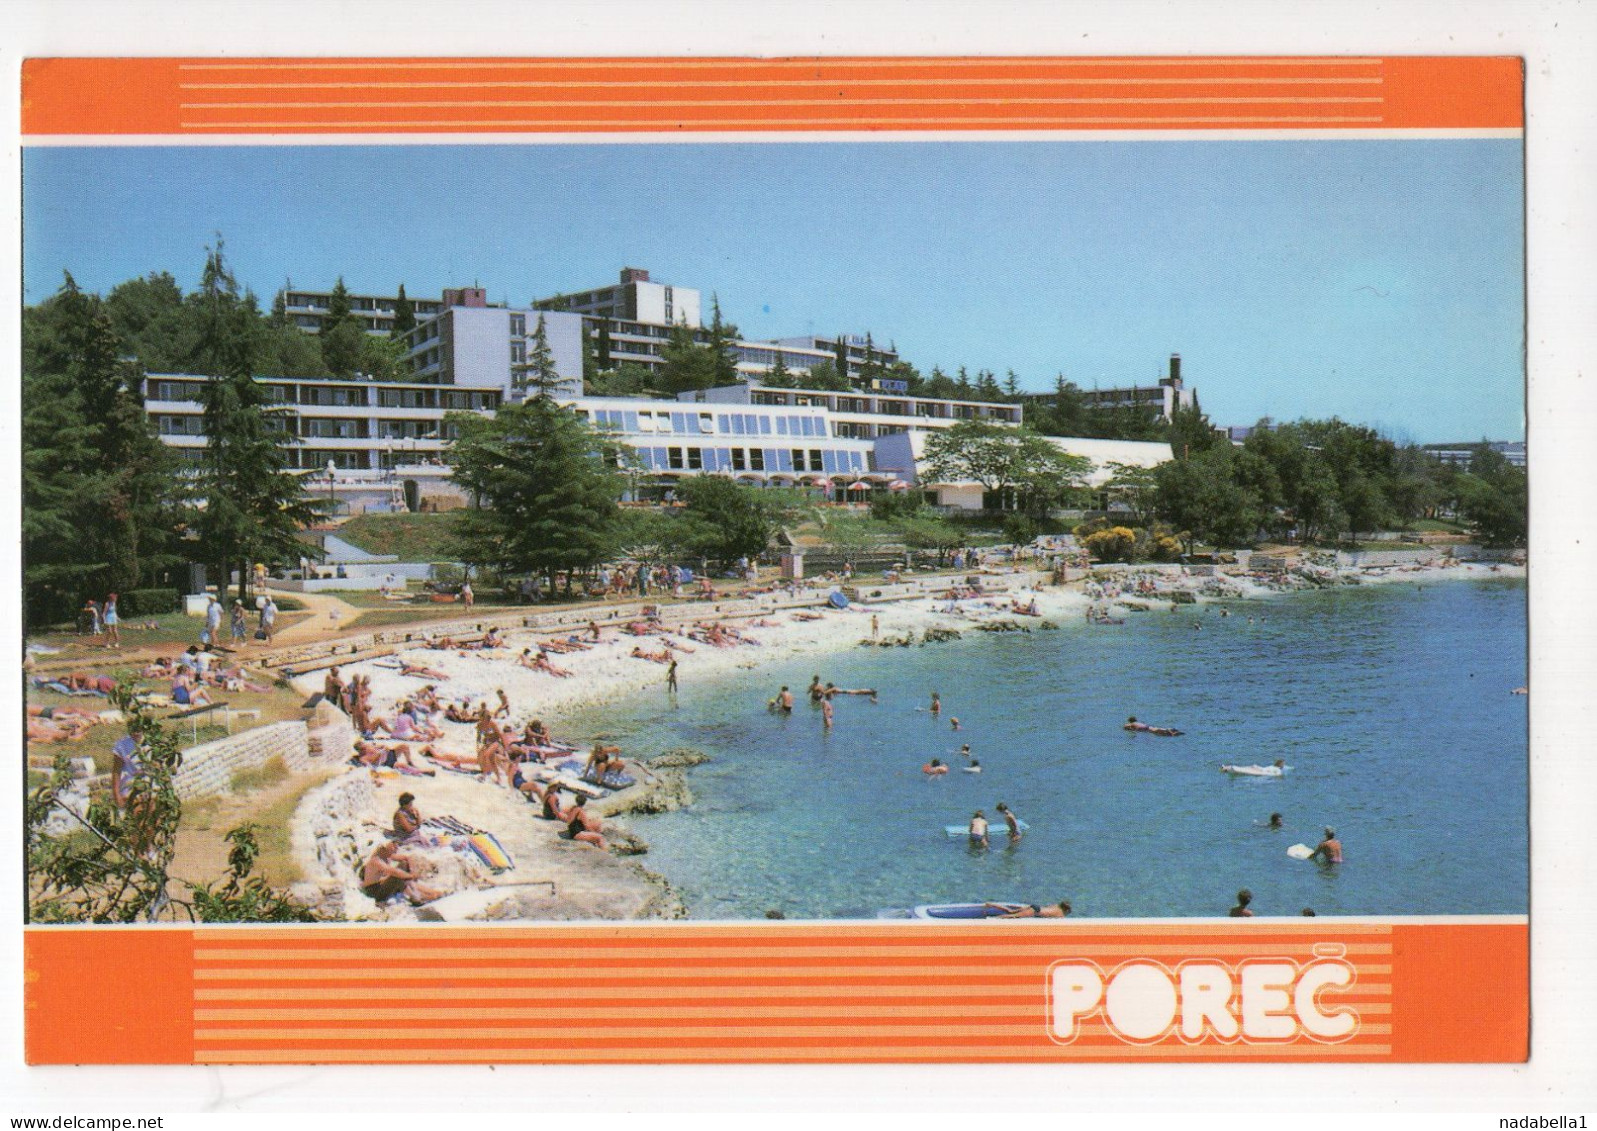 1988. YUGOSLAVIA,CROATIA,POREČ,POSTCARD,USED,POSTAL STAMP USED AS POSTAGE DUE - Postage Due